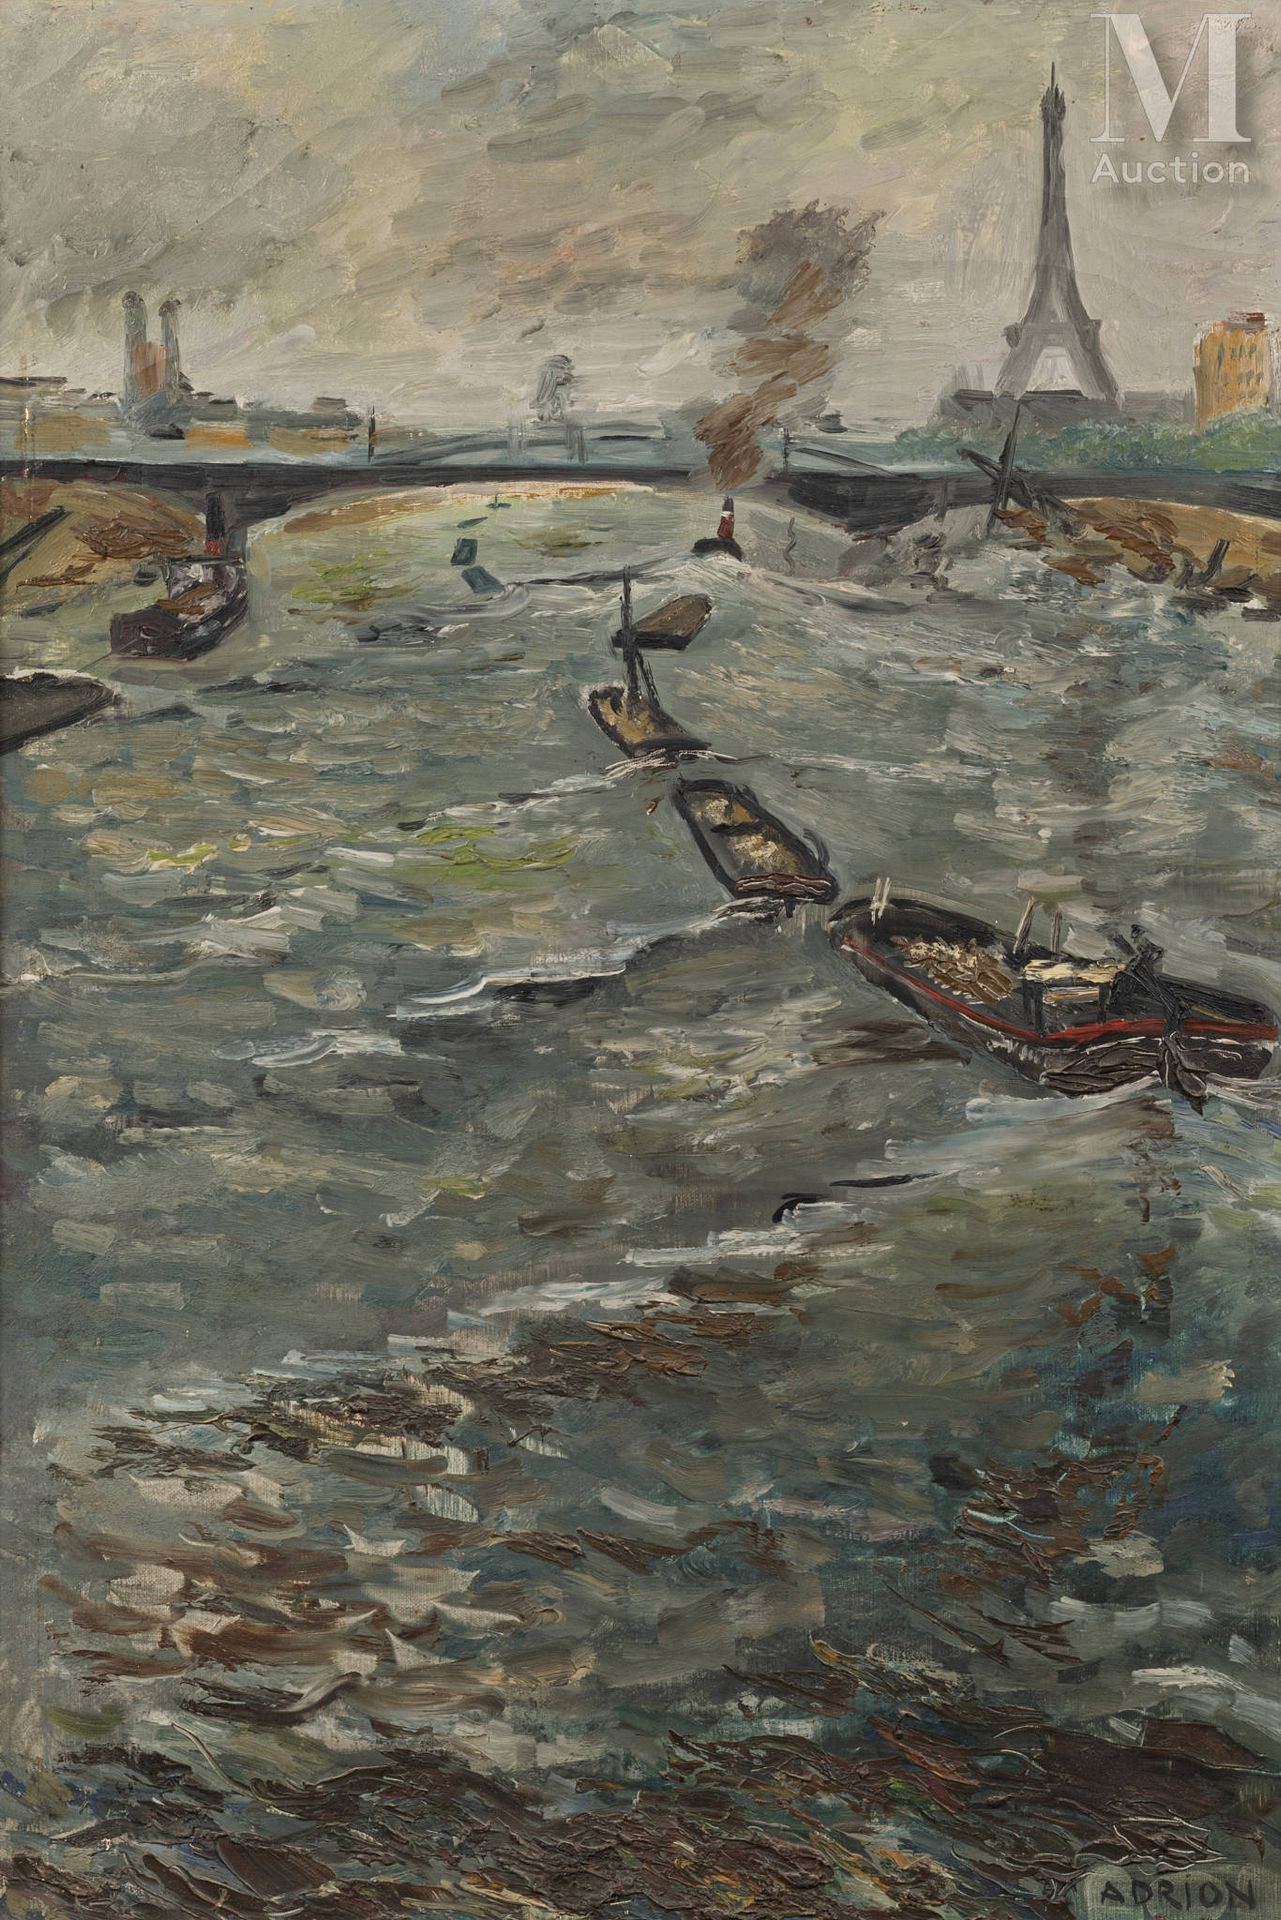 Lucien ADRION (Strasbourg 1889 - Paris 1953) 巴黎的塞纳河和埃菲尔铁塔

原始画布上的油画
72 x 40厘米
签名&hellip;